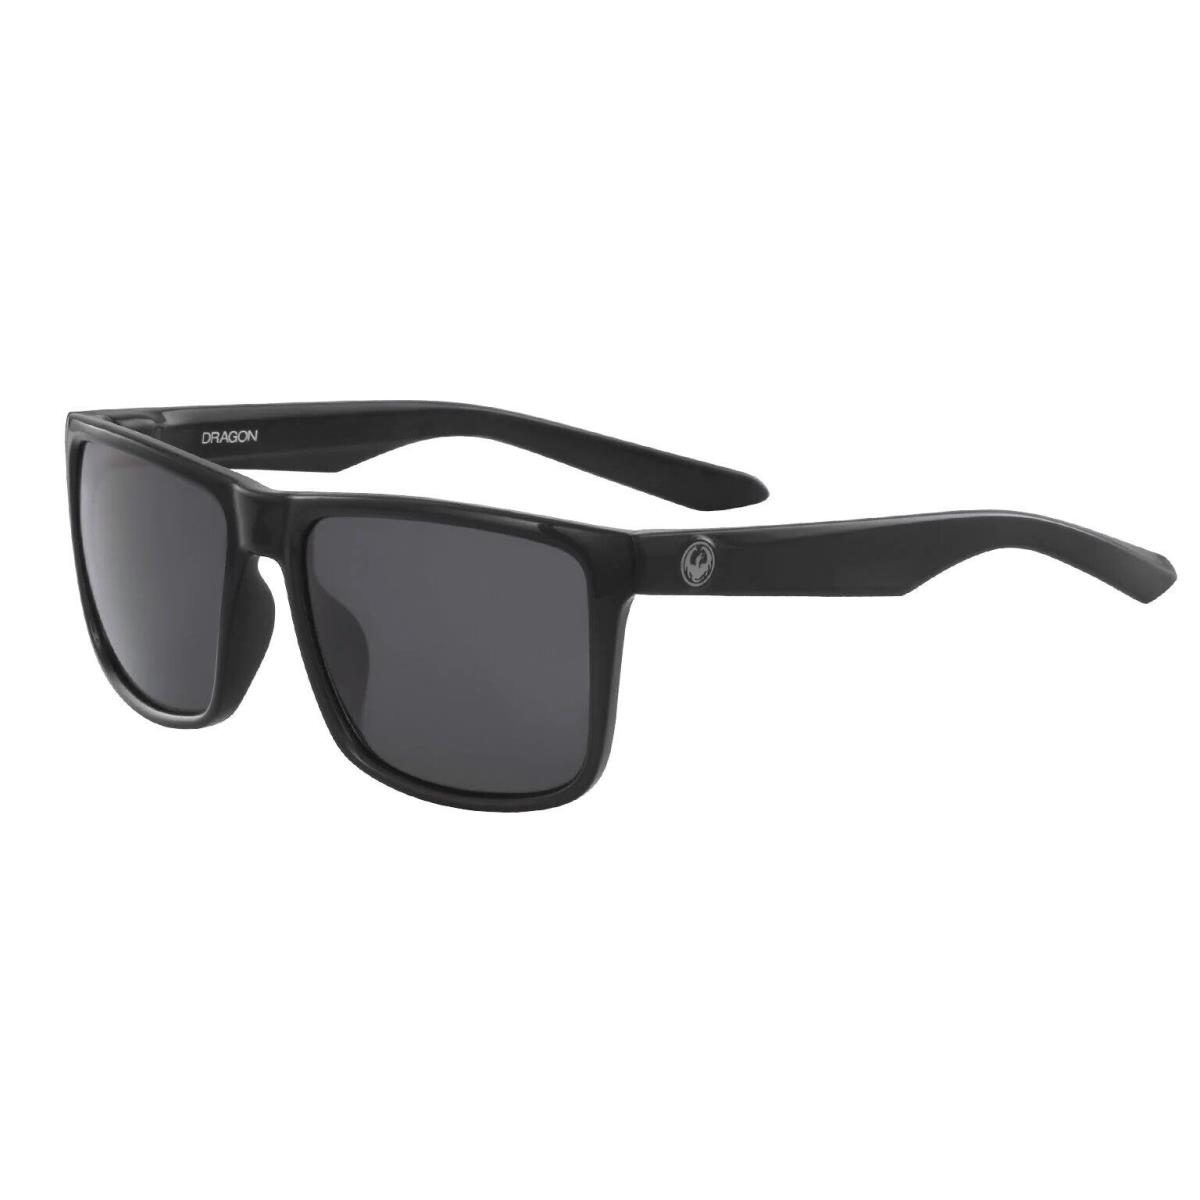 Dragon Meridien H2O Sunglasses - Black / Lumalens Smoke Polarized Lens